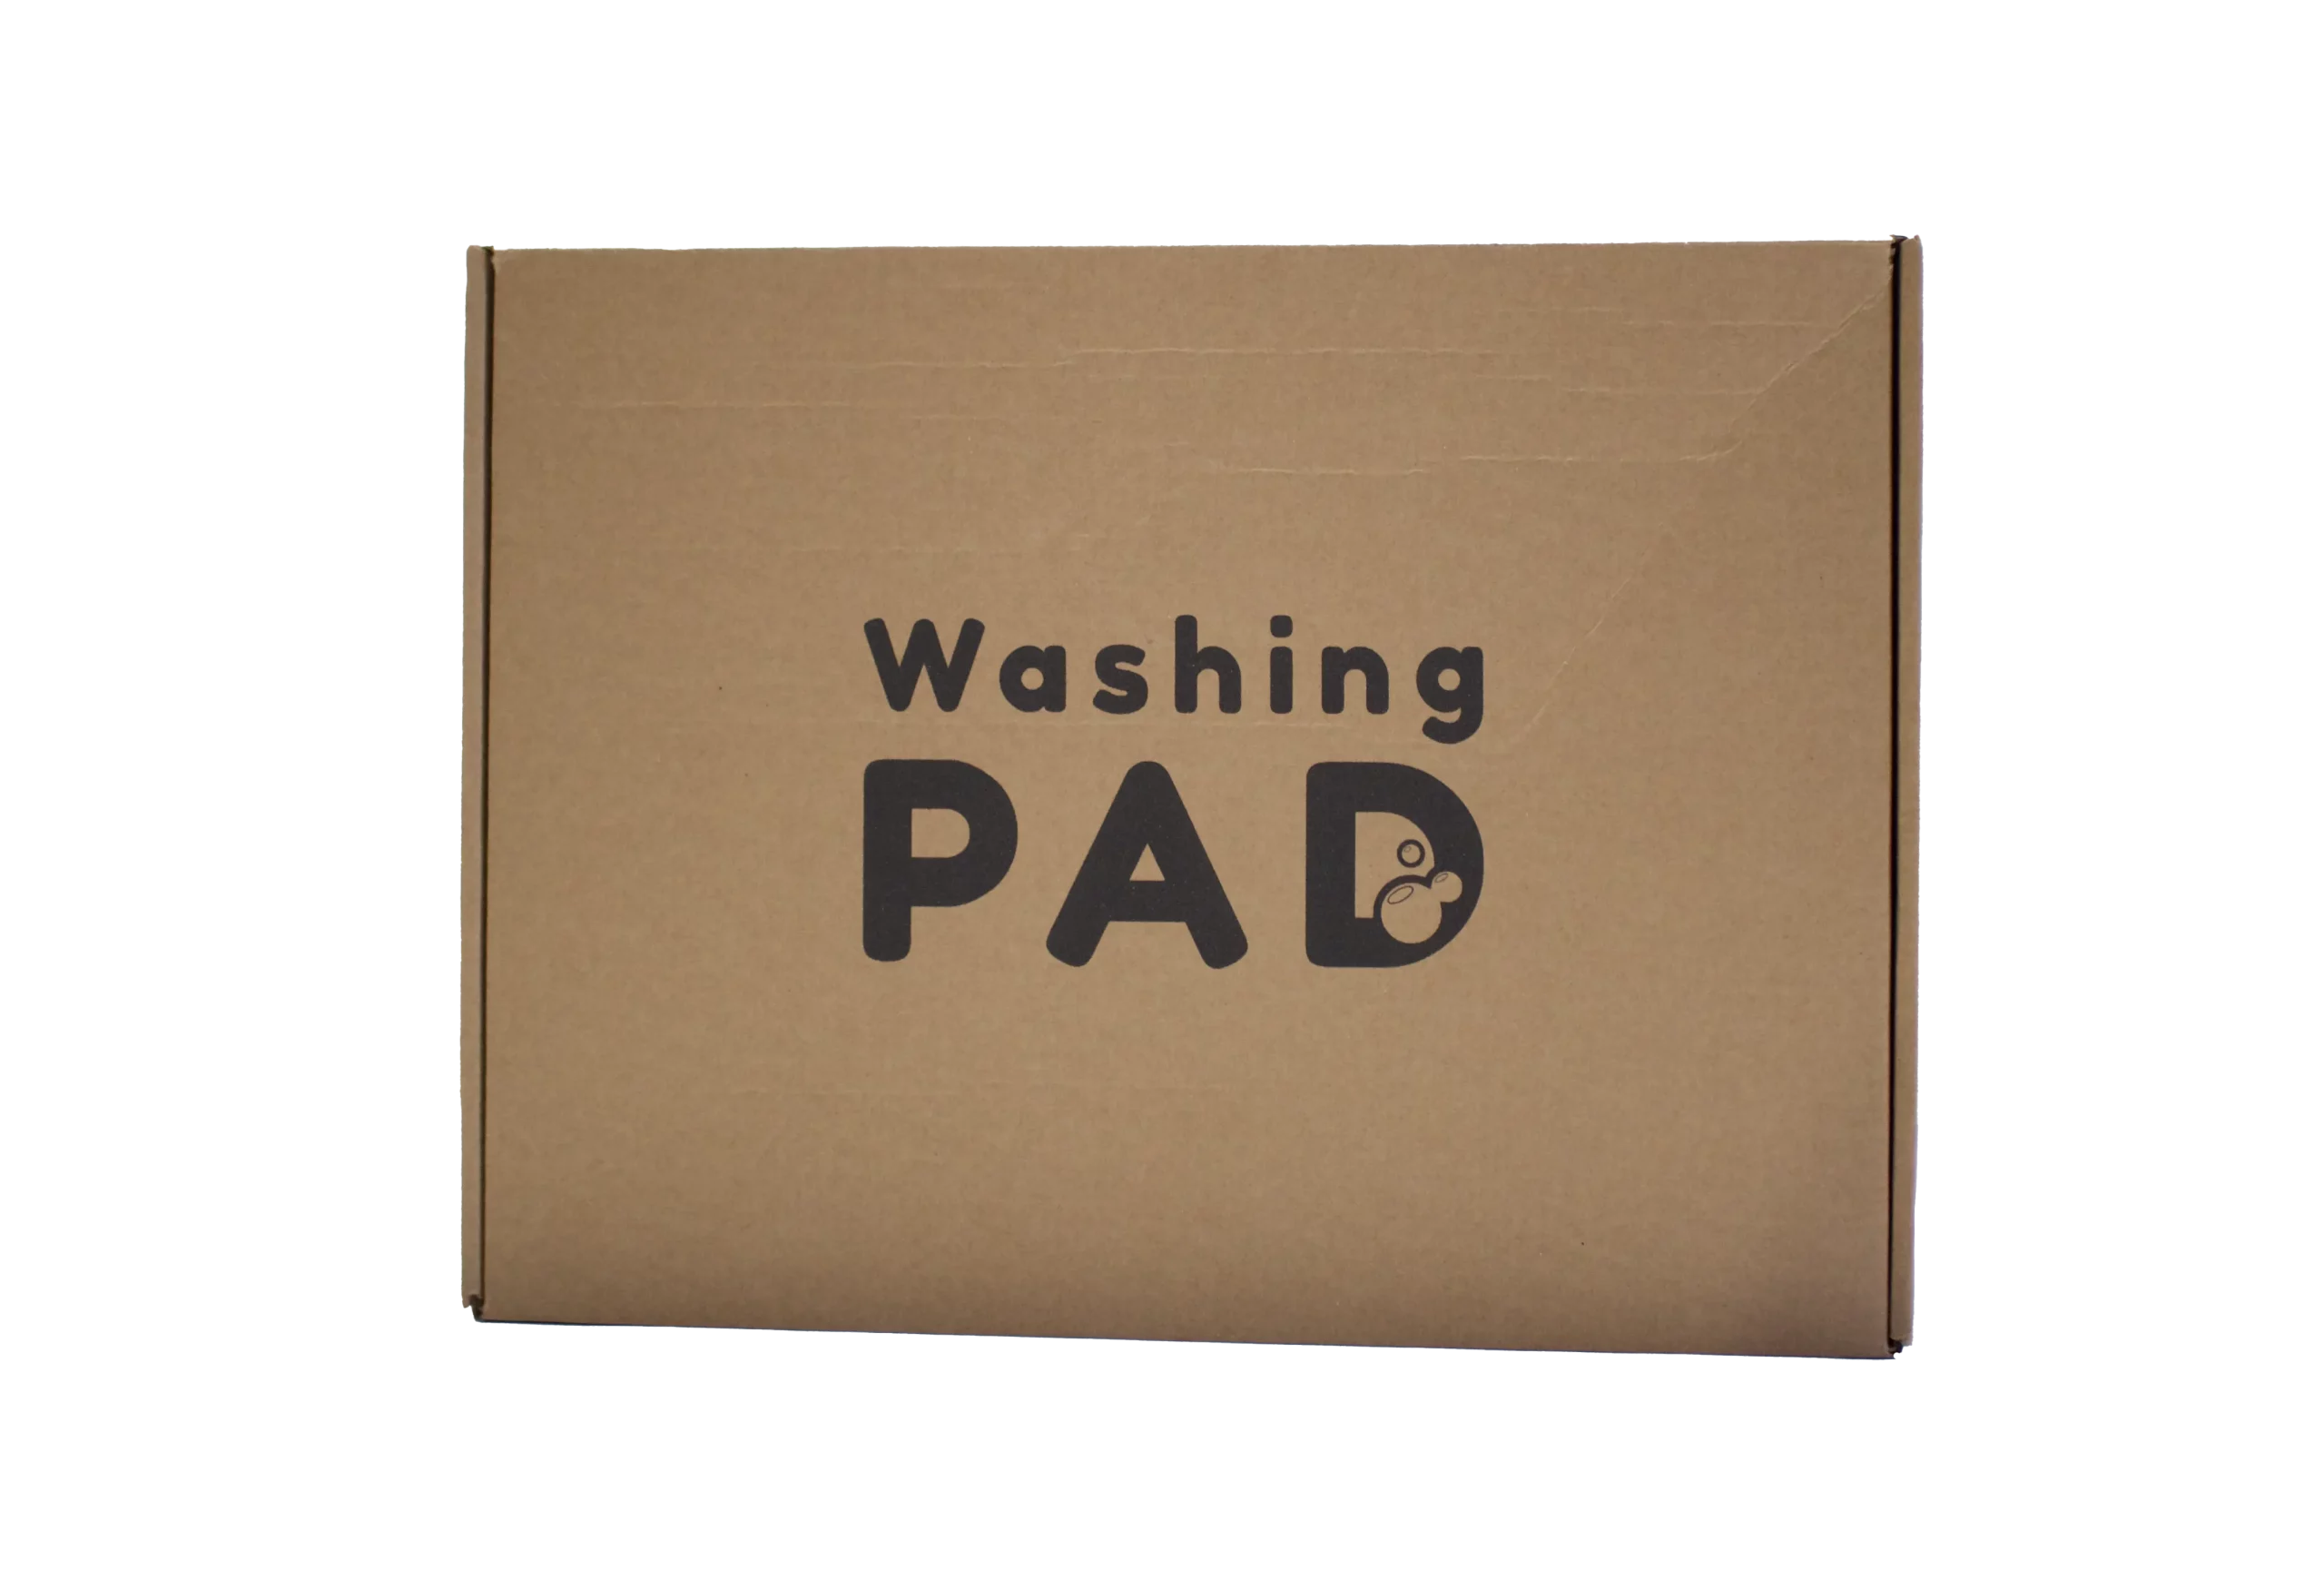 Box Washing pad